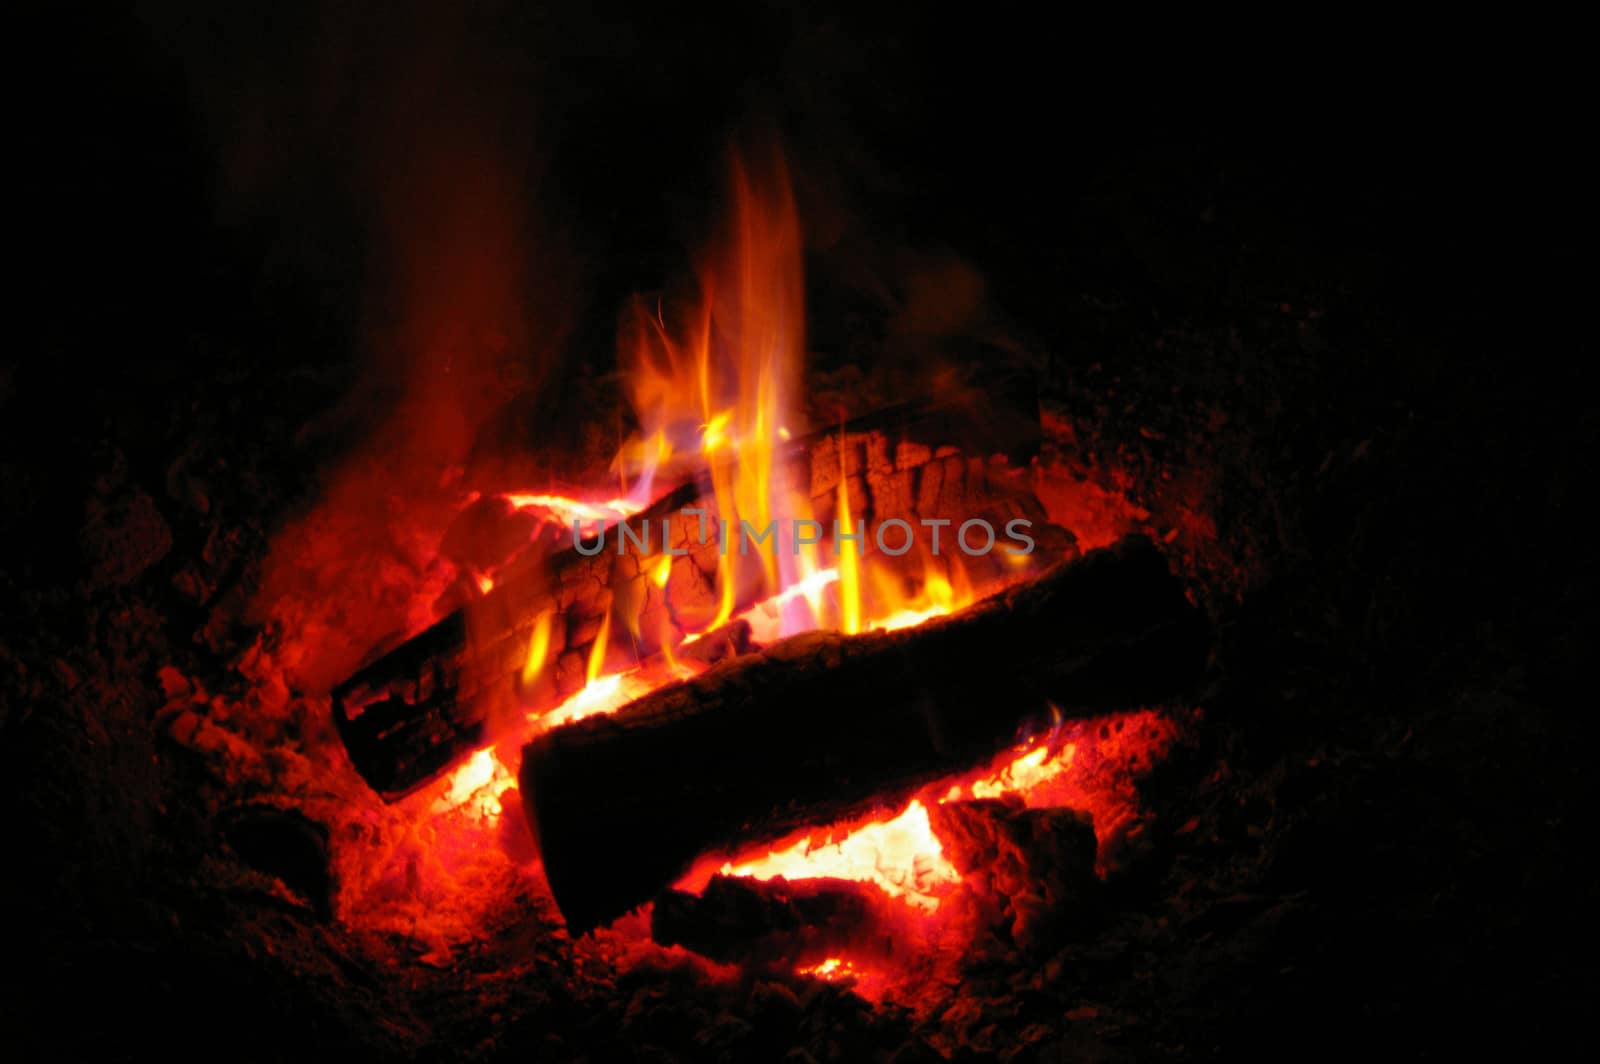 night bonfire, fire and smoke on a dark background